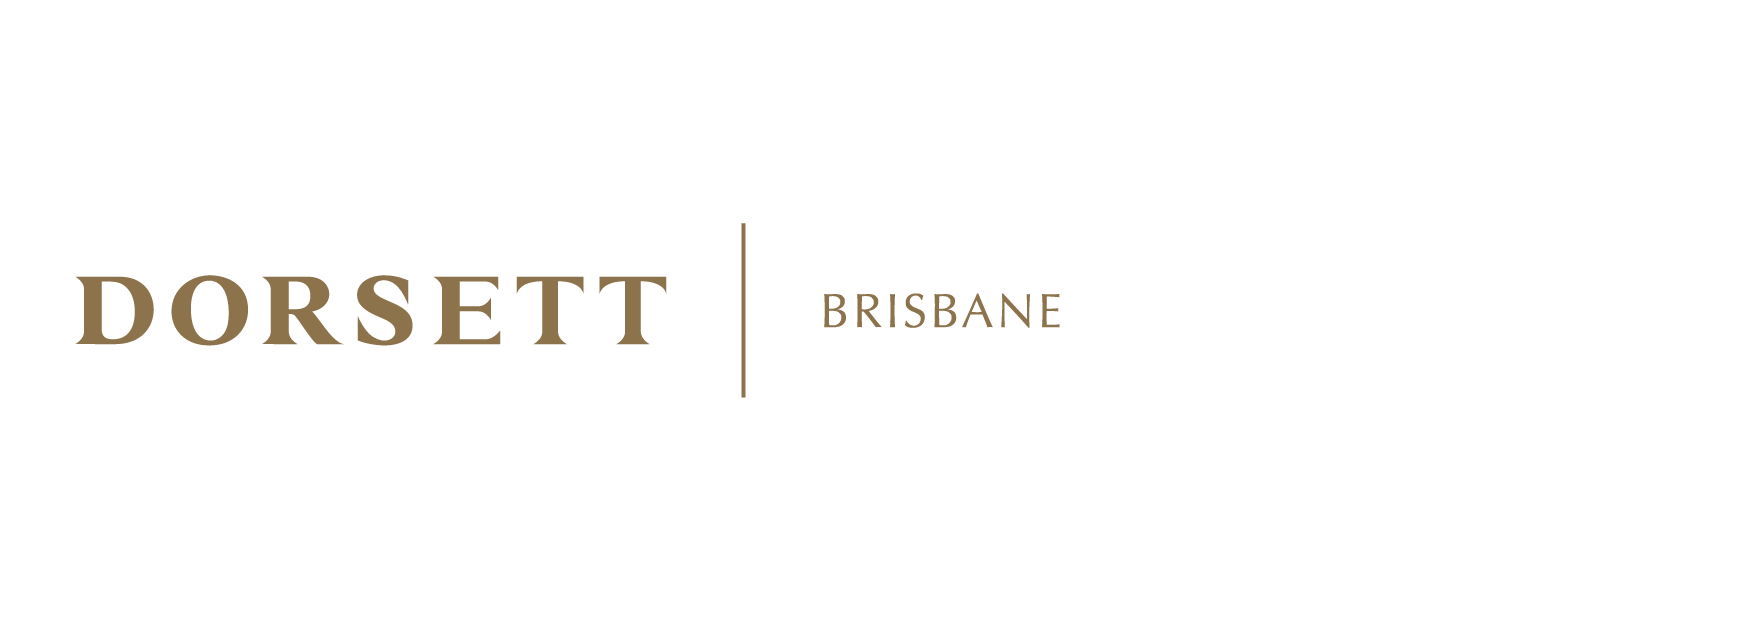 Dorsett Brisbane